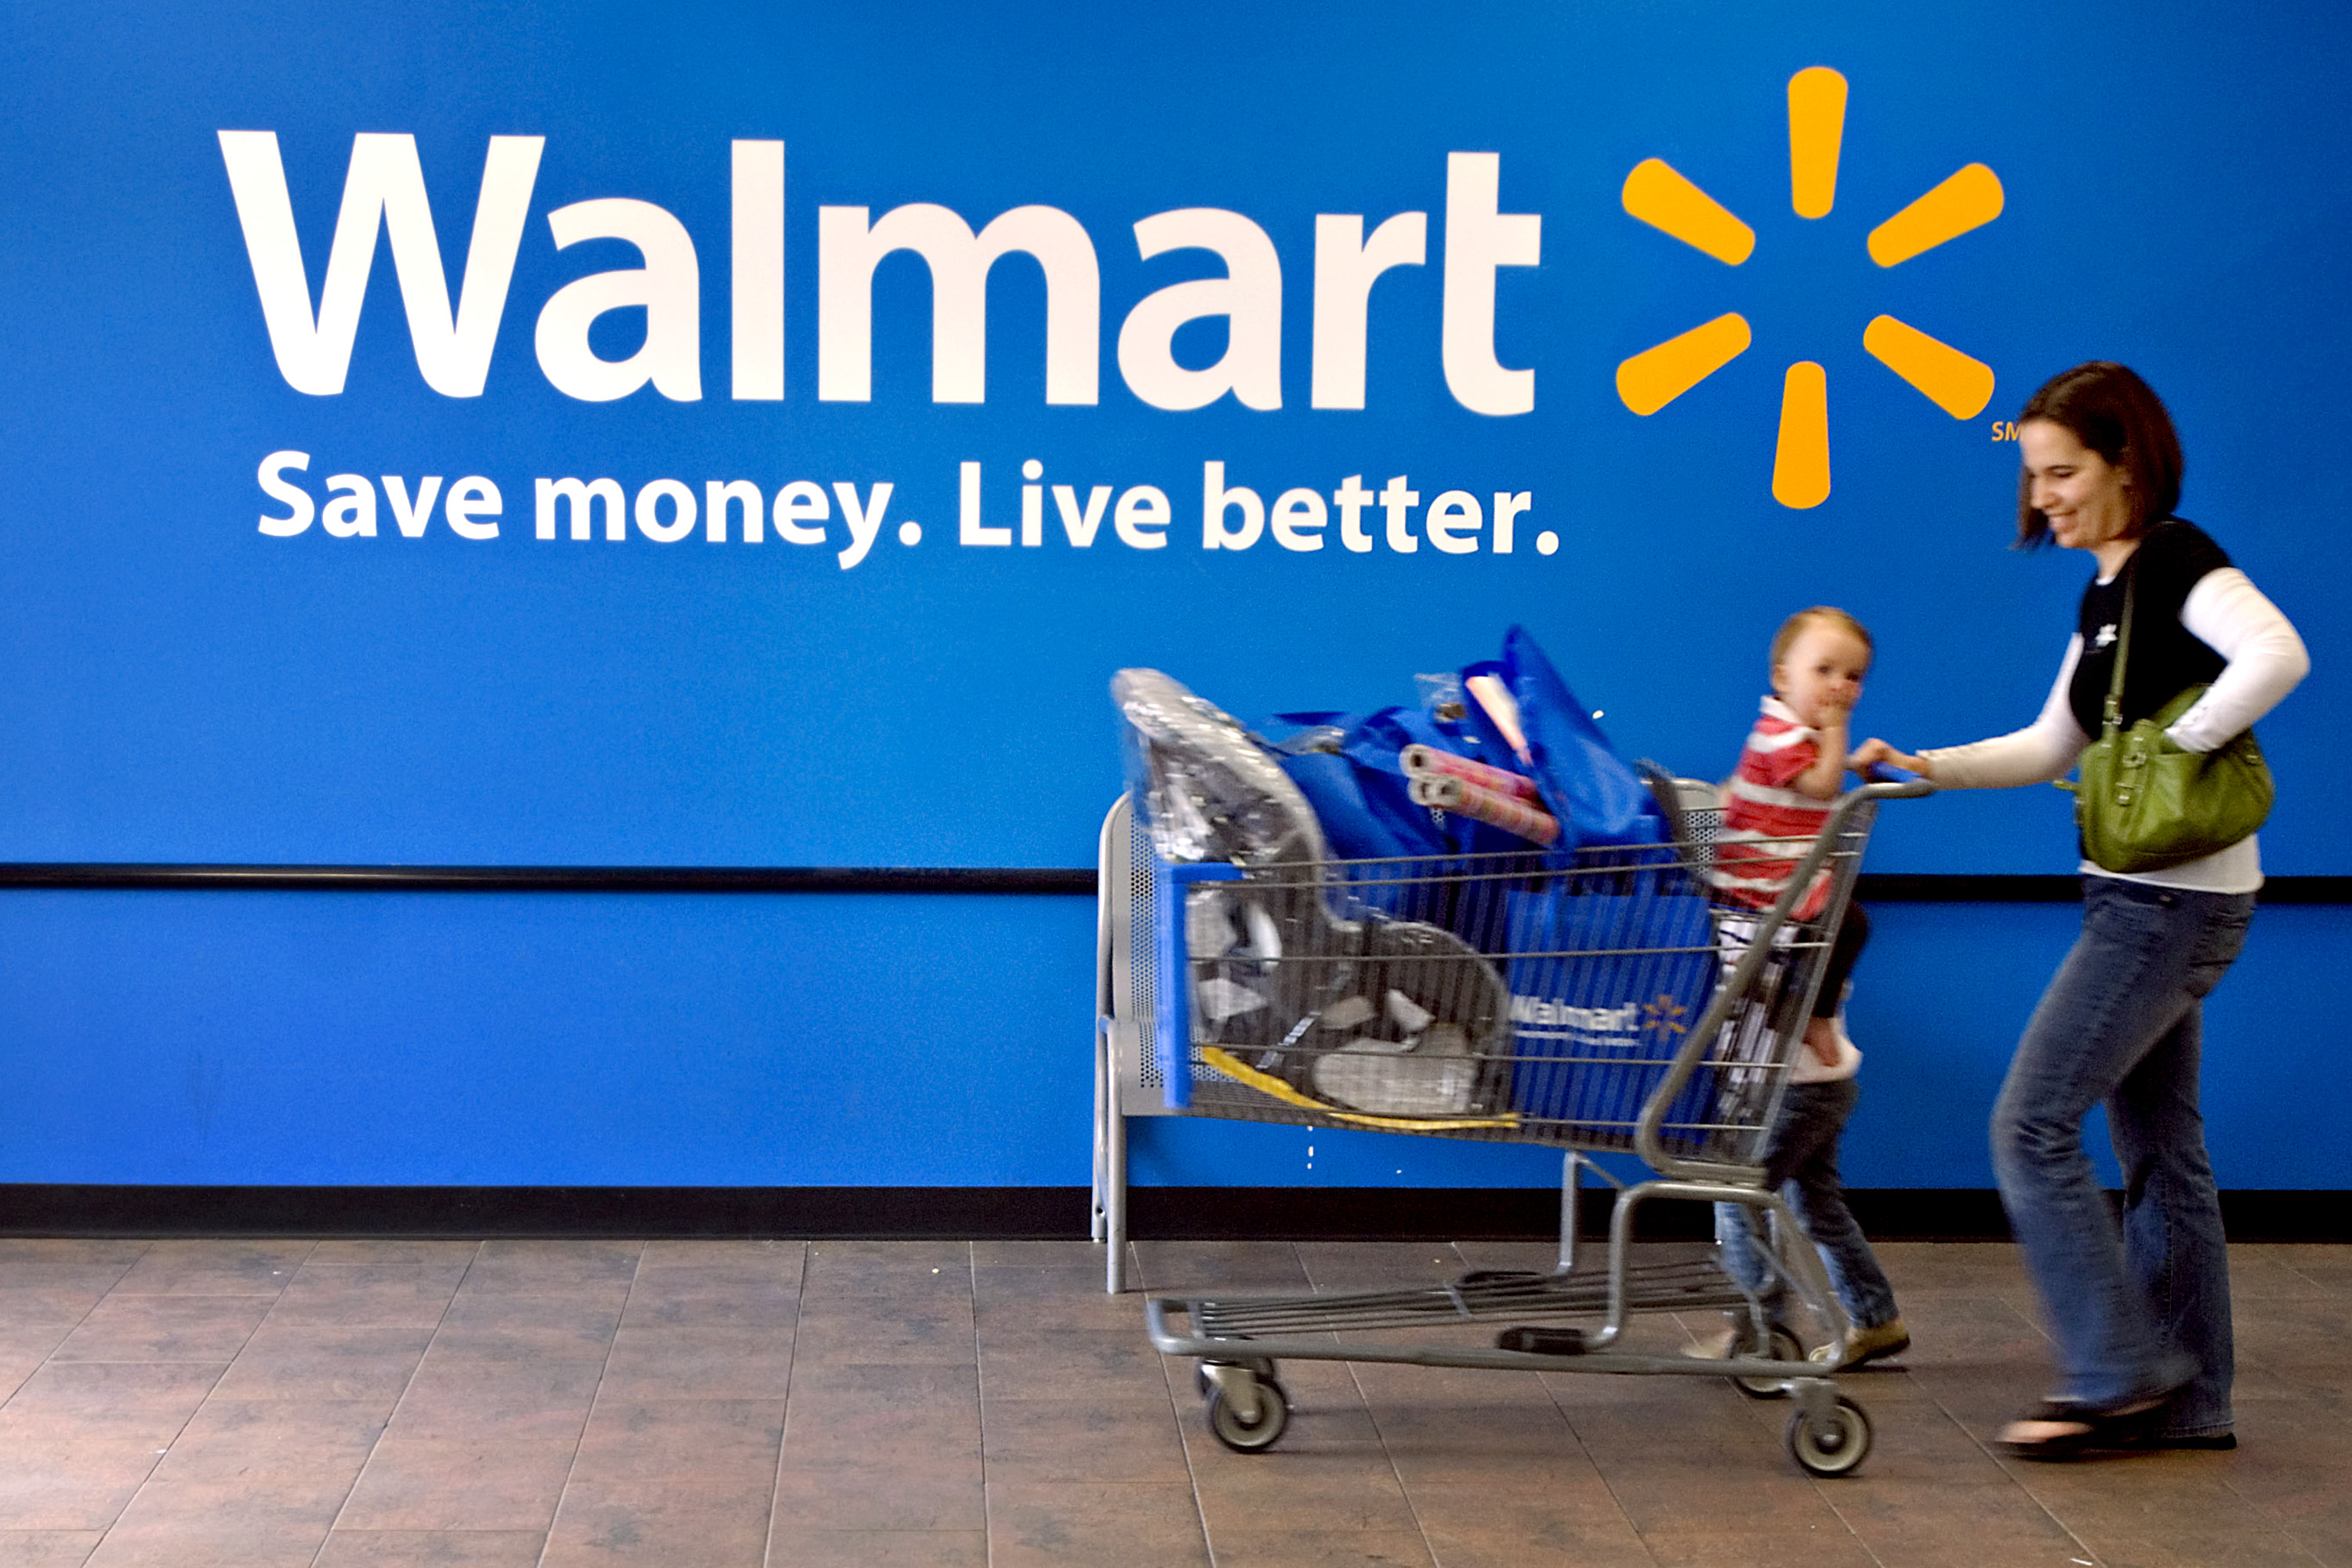 Money live better. Walmart реклама. Реклама Волмарт. Лозунг Волмарт. Wal-Mart слоган.